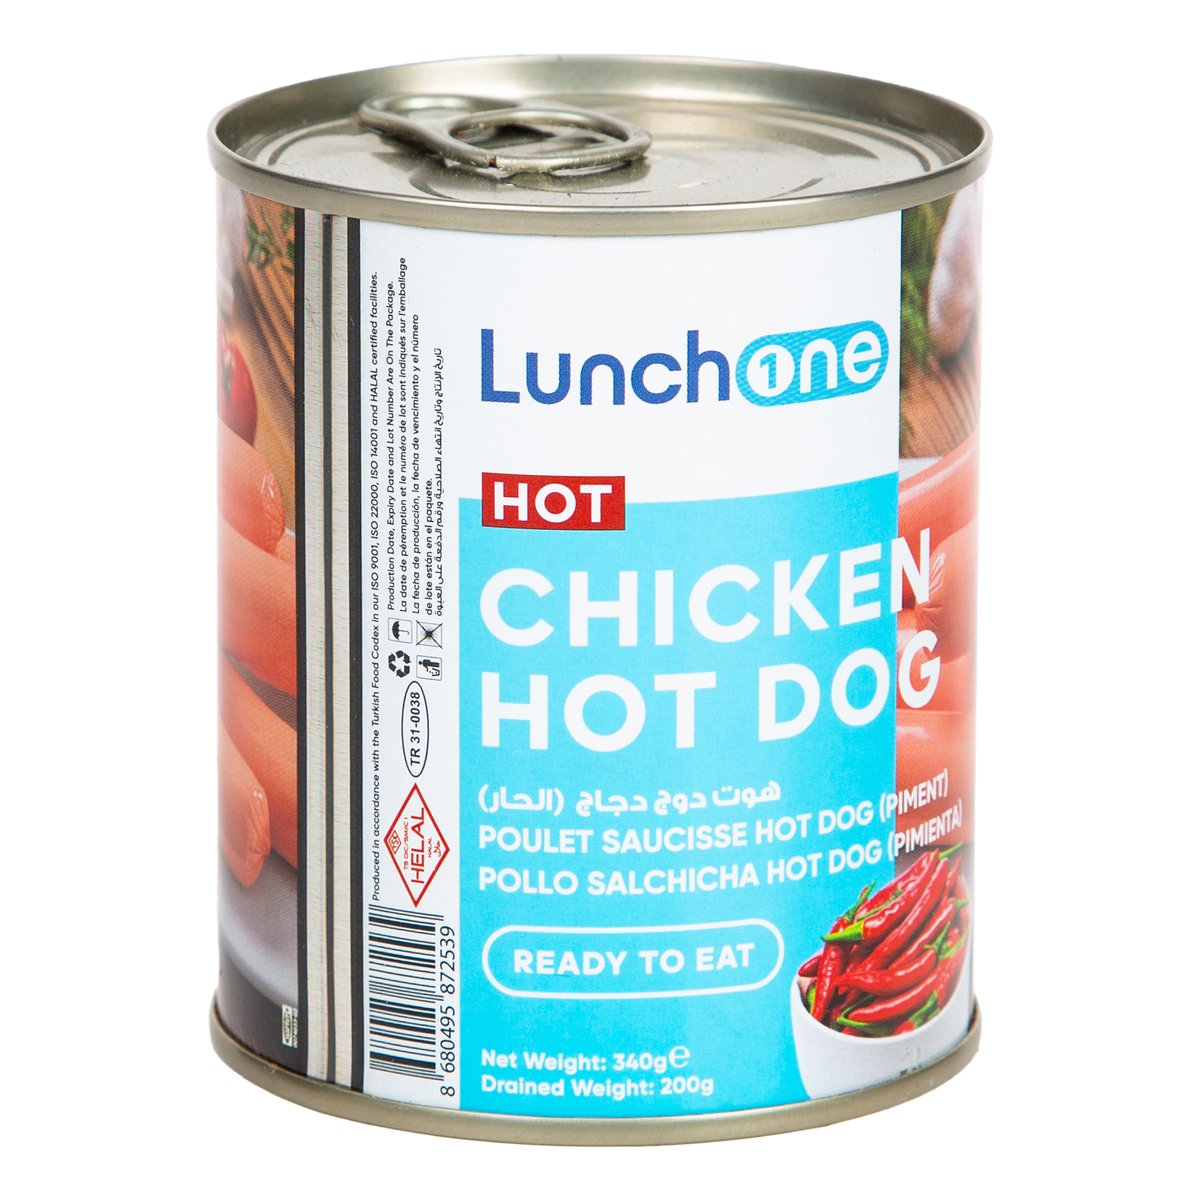 Lunchone Hot Chicken Hot Dog 340 g